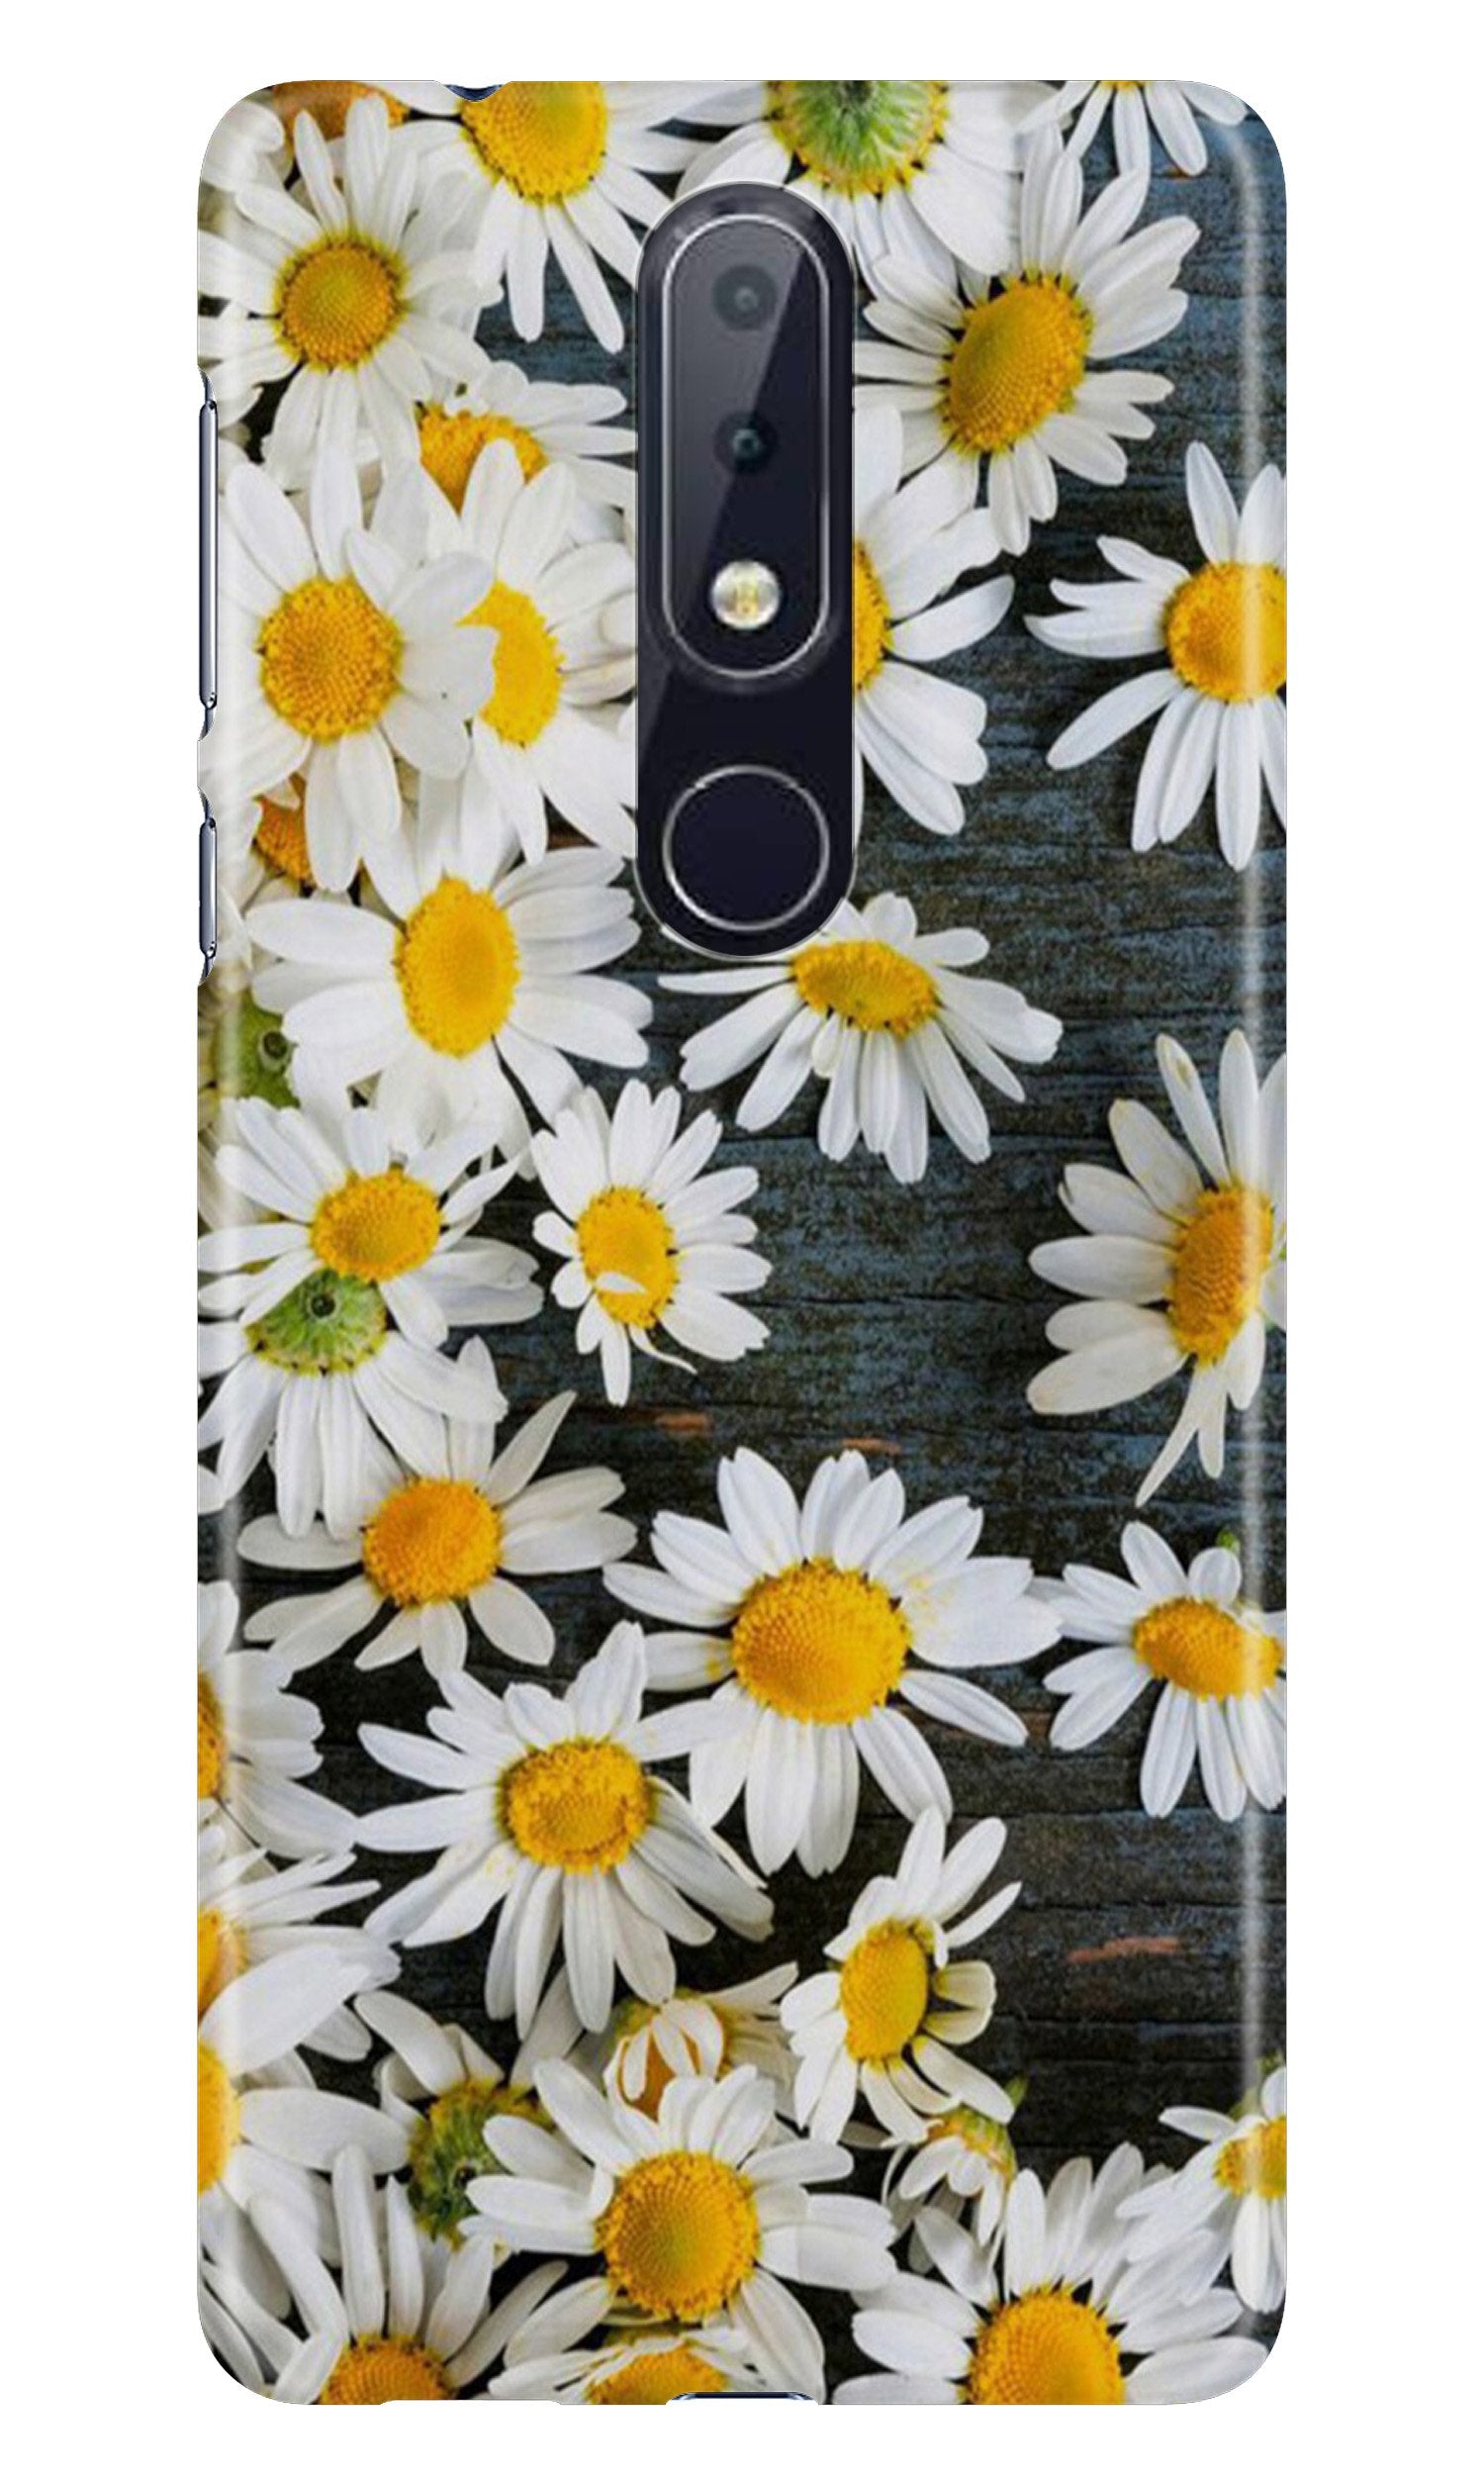 White flowers2 Case for Nokia 7.1